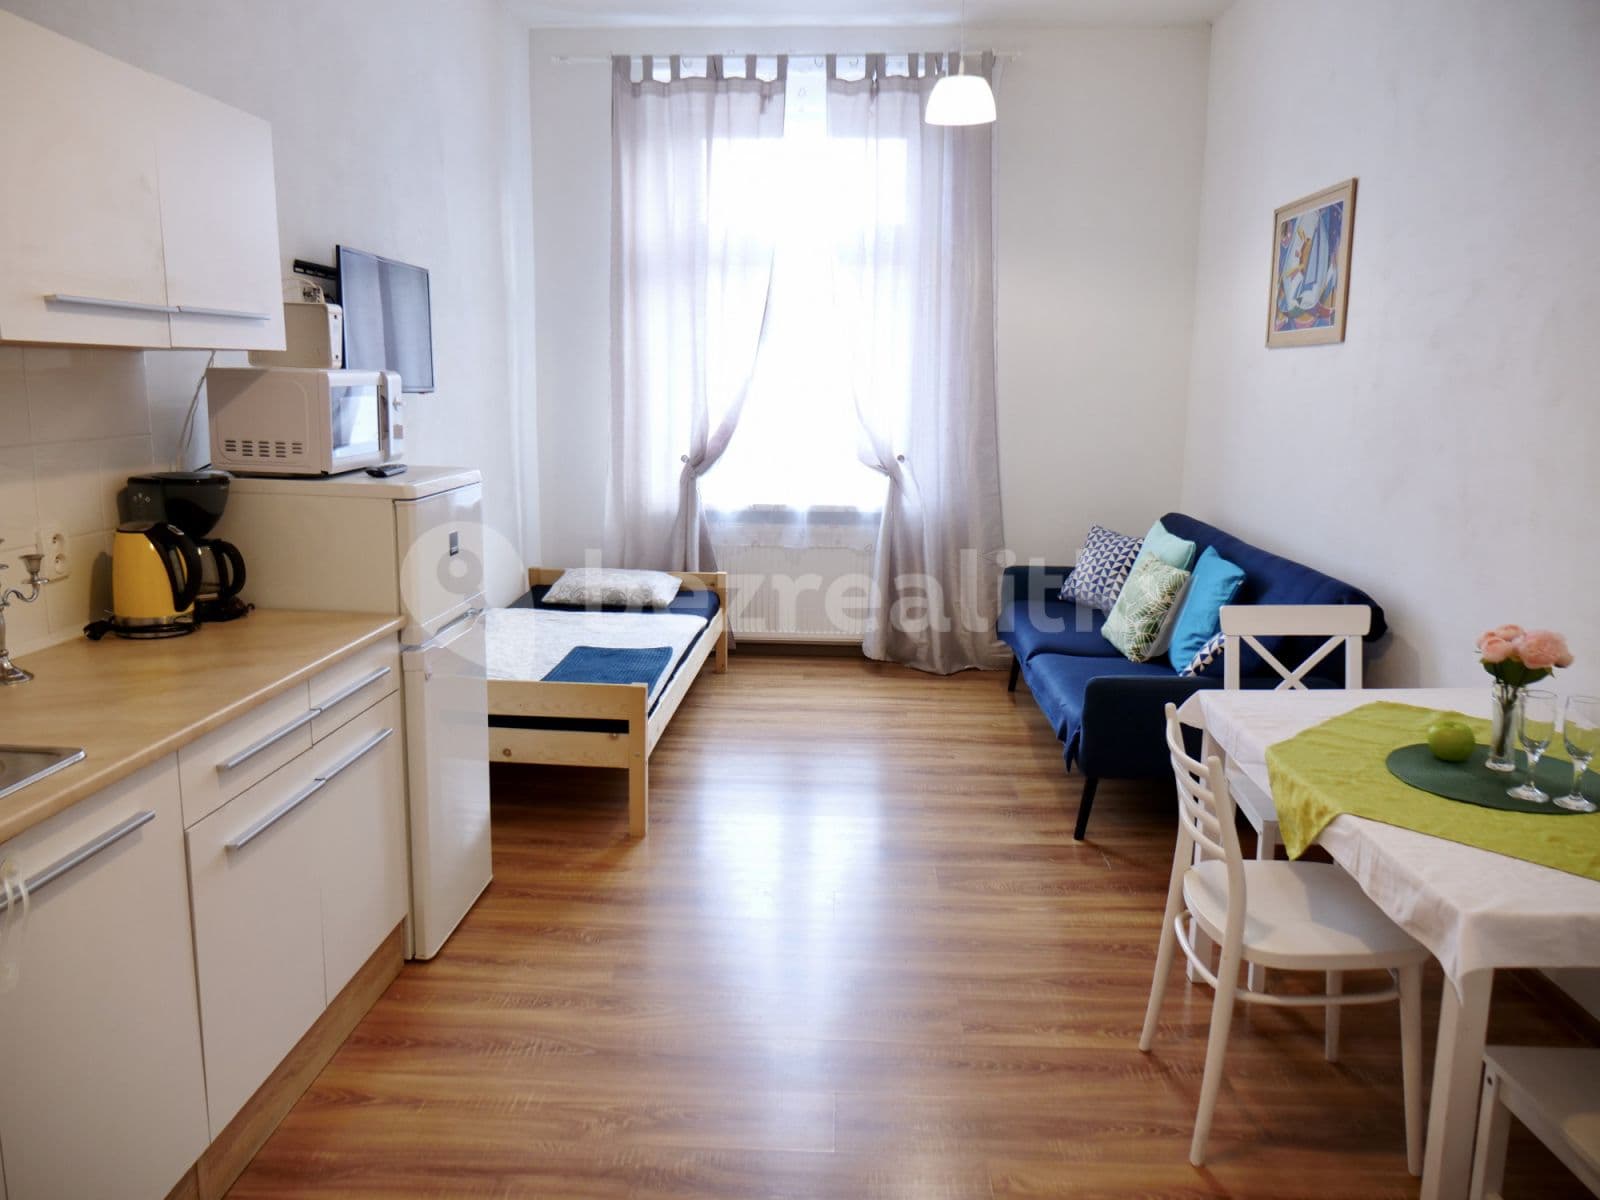 Studio flat to rent, 48 m², Ruská, Teplice, Ústecký Region